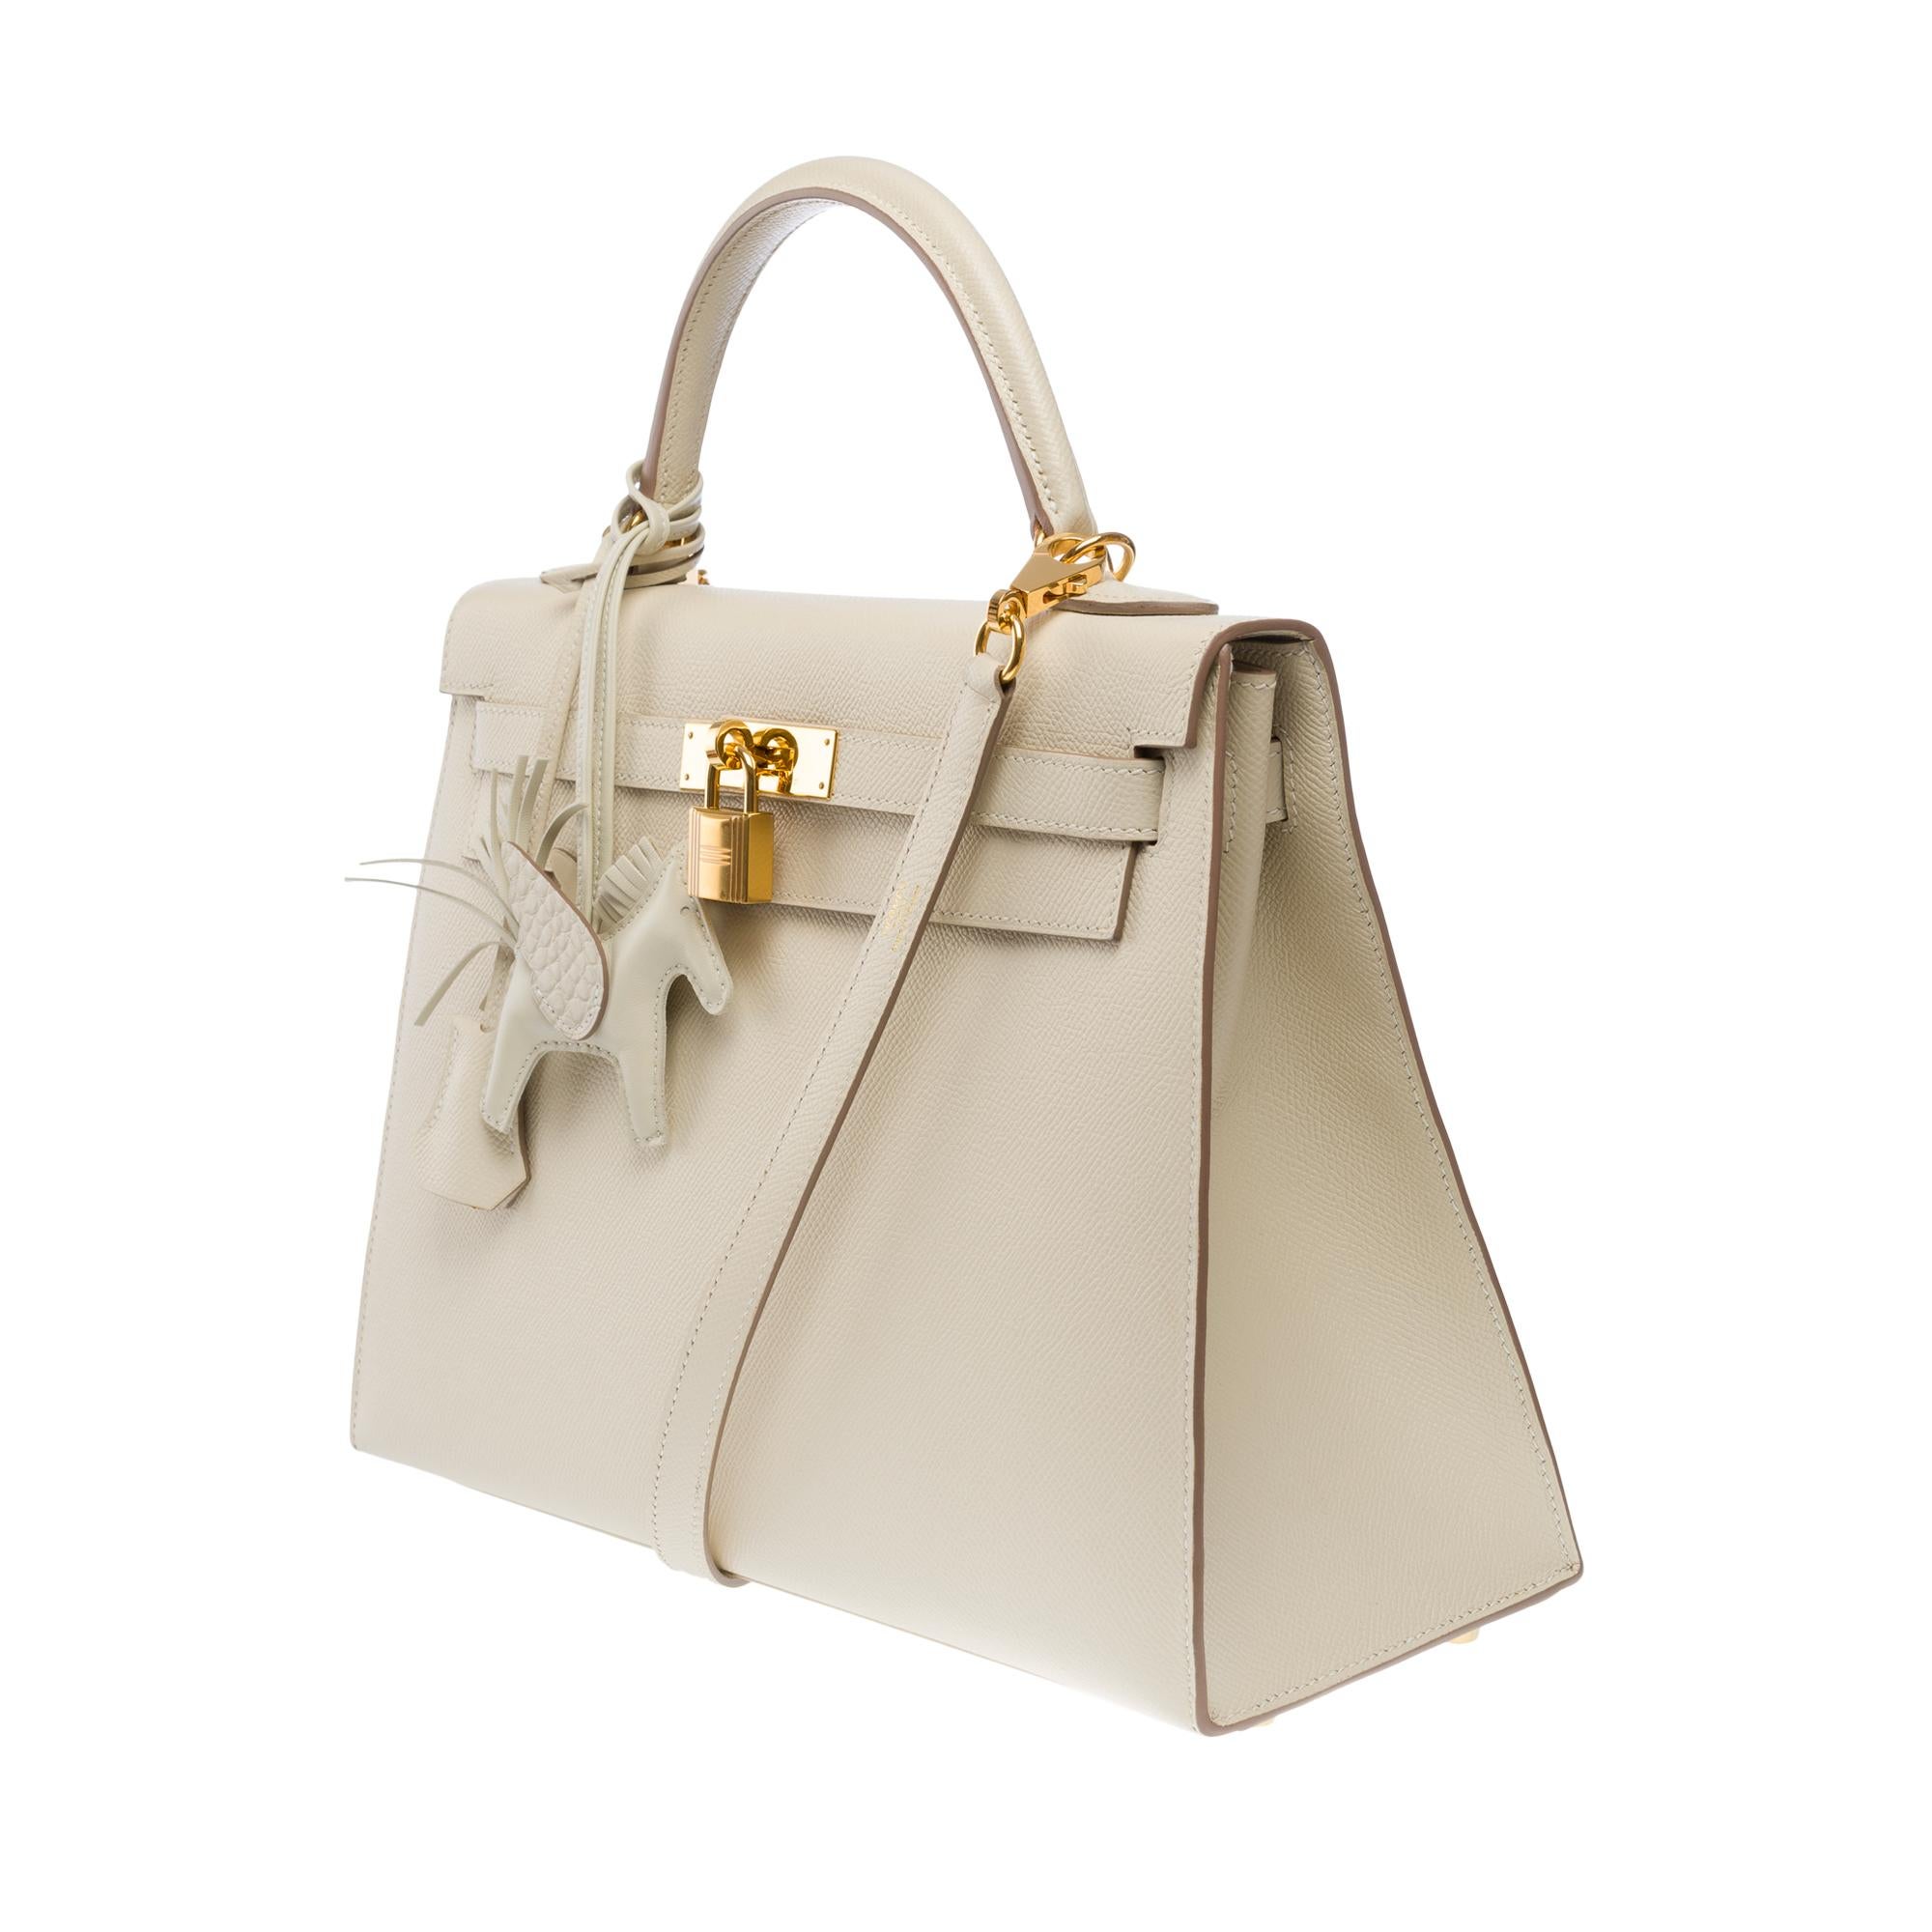 Stunning Hermès Kelly 32 sellier handbag strap in Craie epsom leather, GHW 1